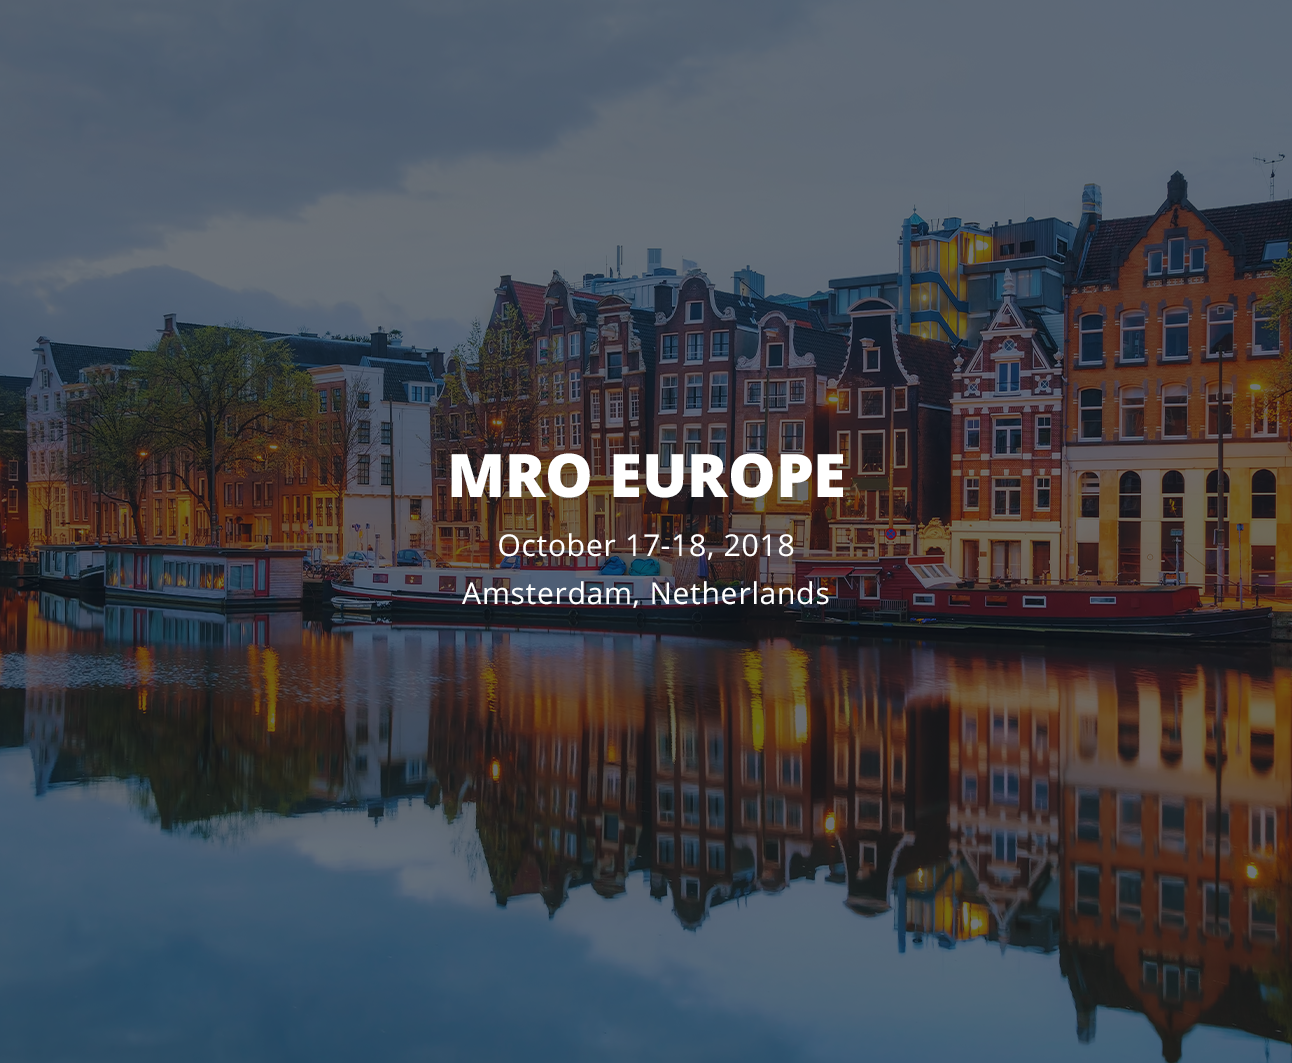 See you at MRO EUROPE 2018!